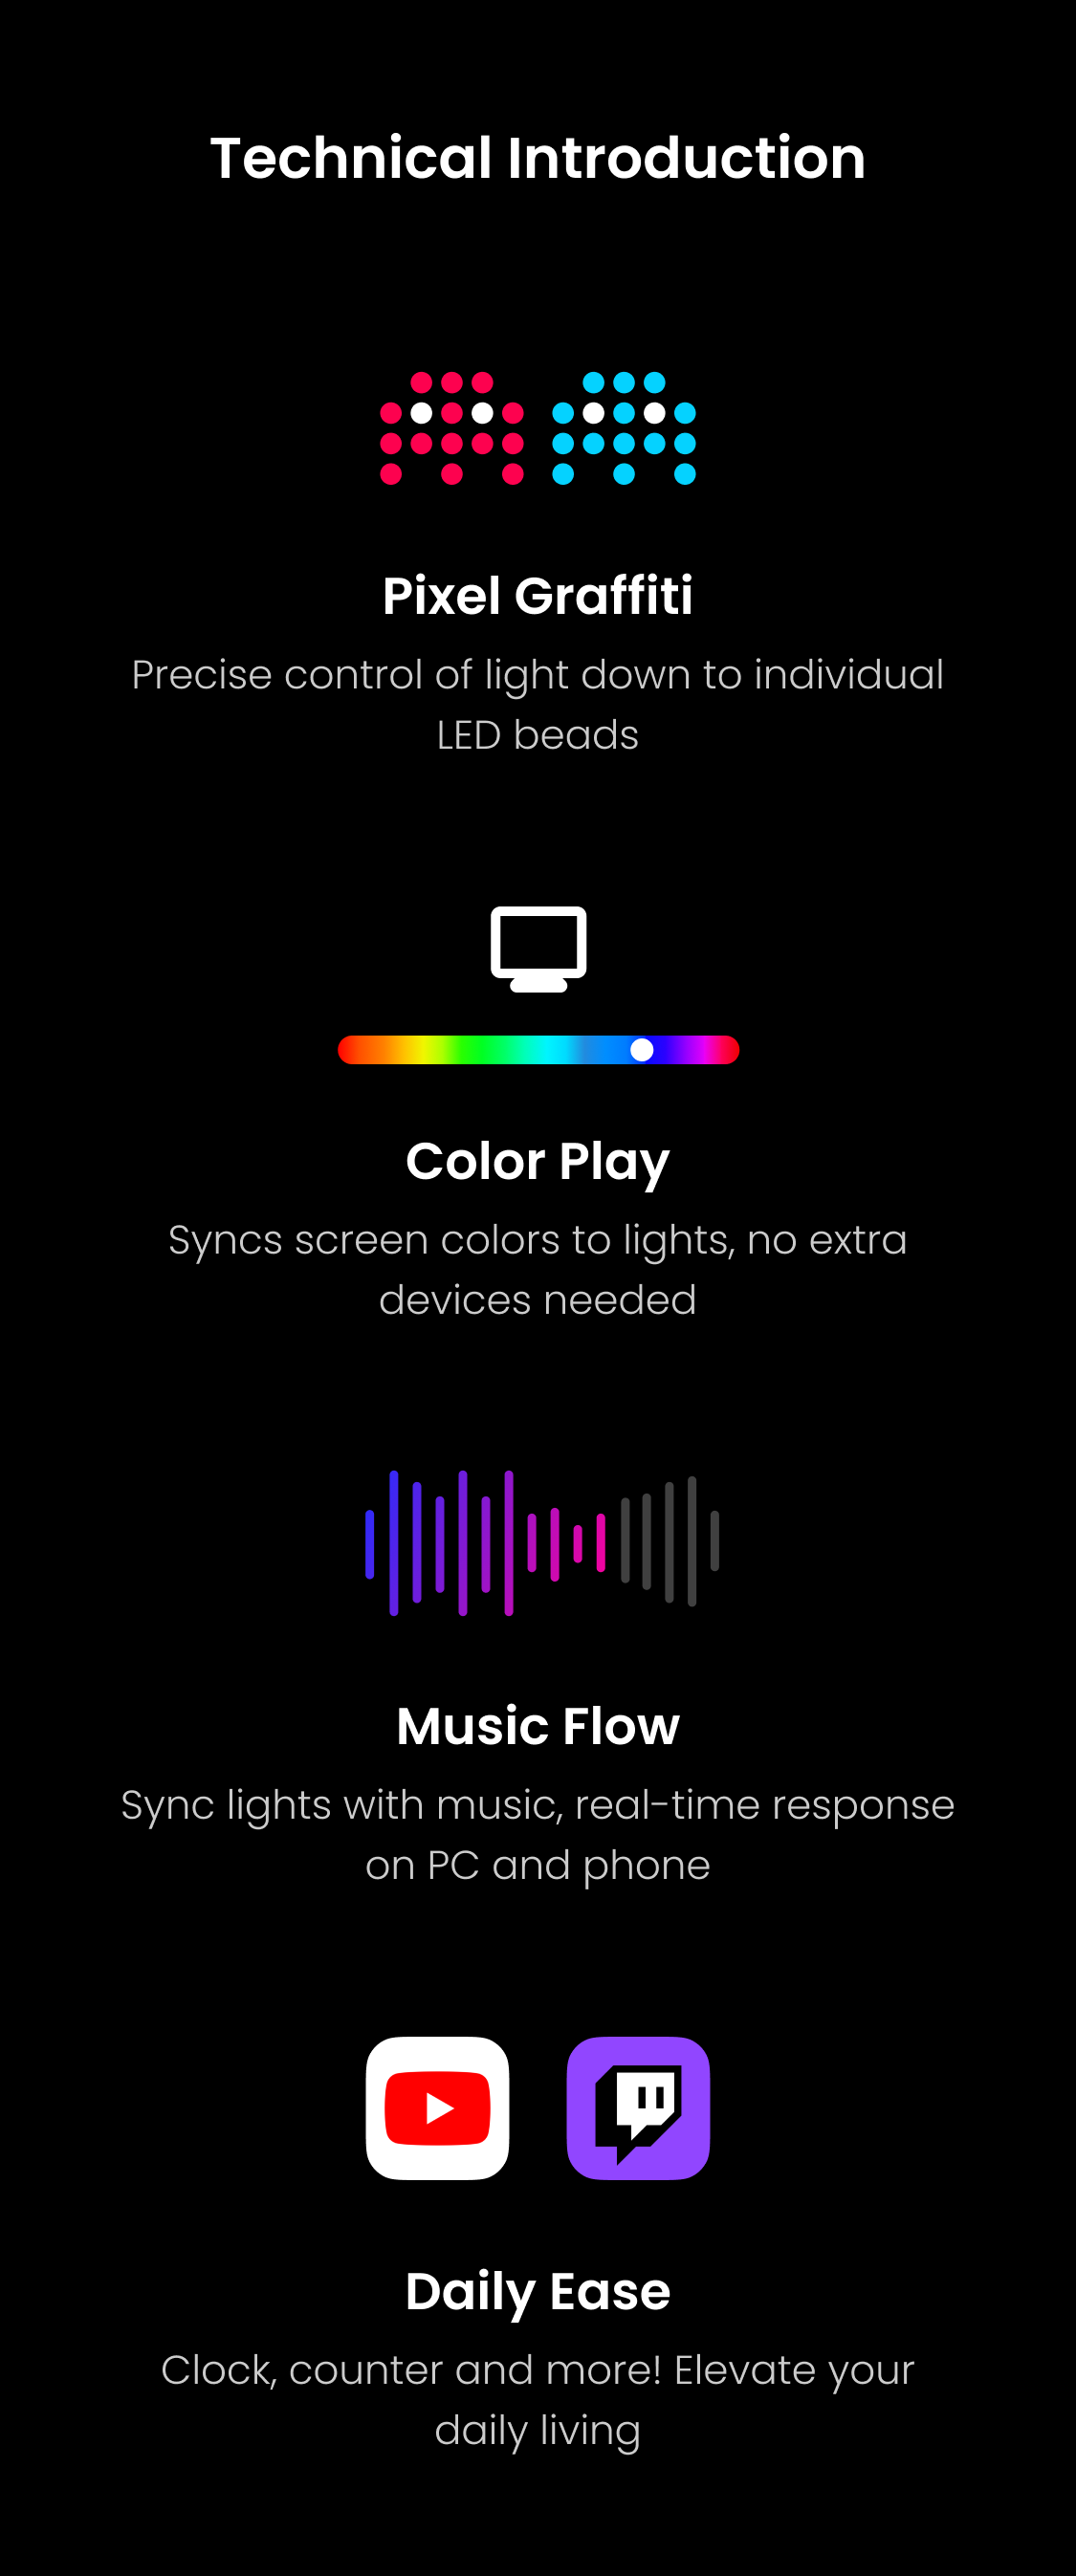 Xiaomi Yeelight Smart LED Colorful Light Bulb with 16 Million Colors and  App Remote Control, 10W, YLDP06YL E27- international version - Colorful  price in Saudi Arabia,  Saudi Arabia